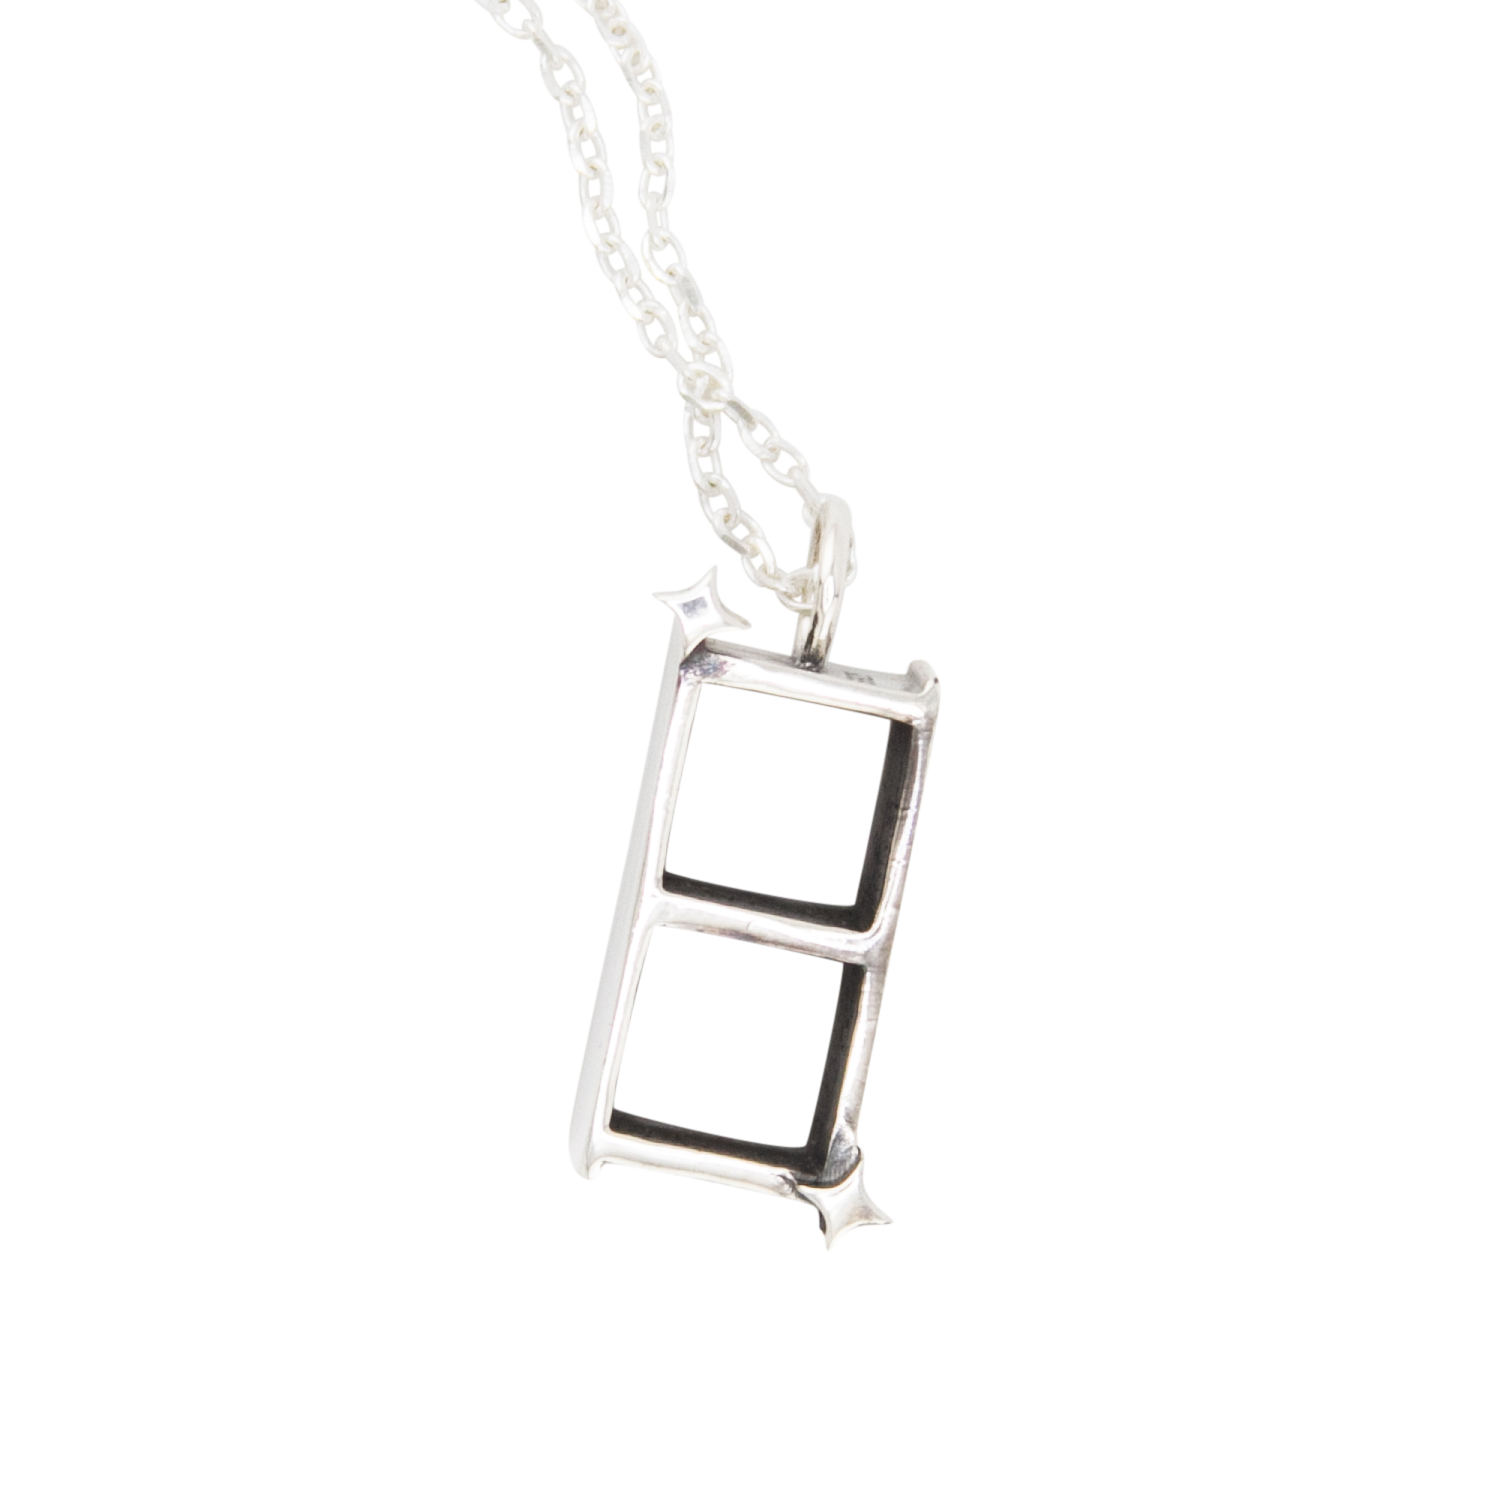 Cinder Block Sparkle Pendant